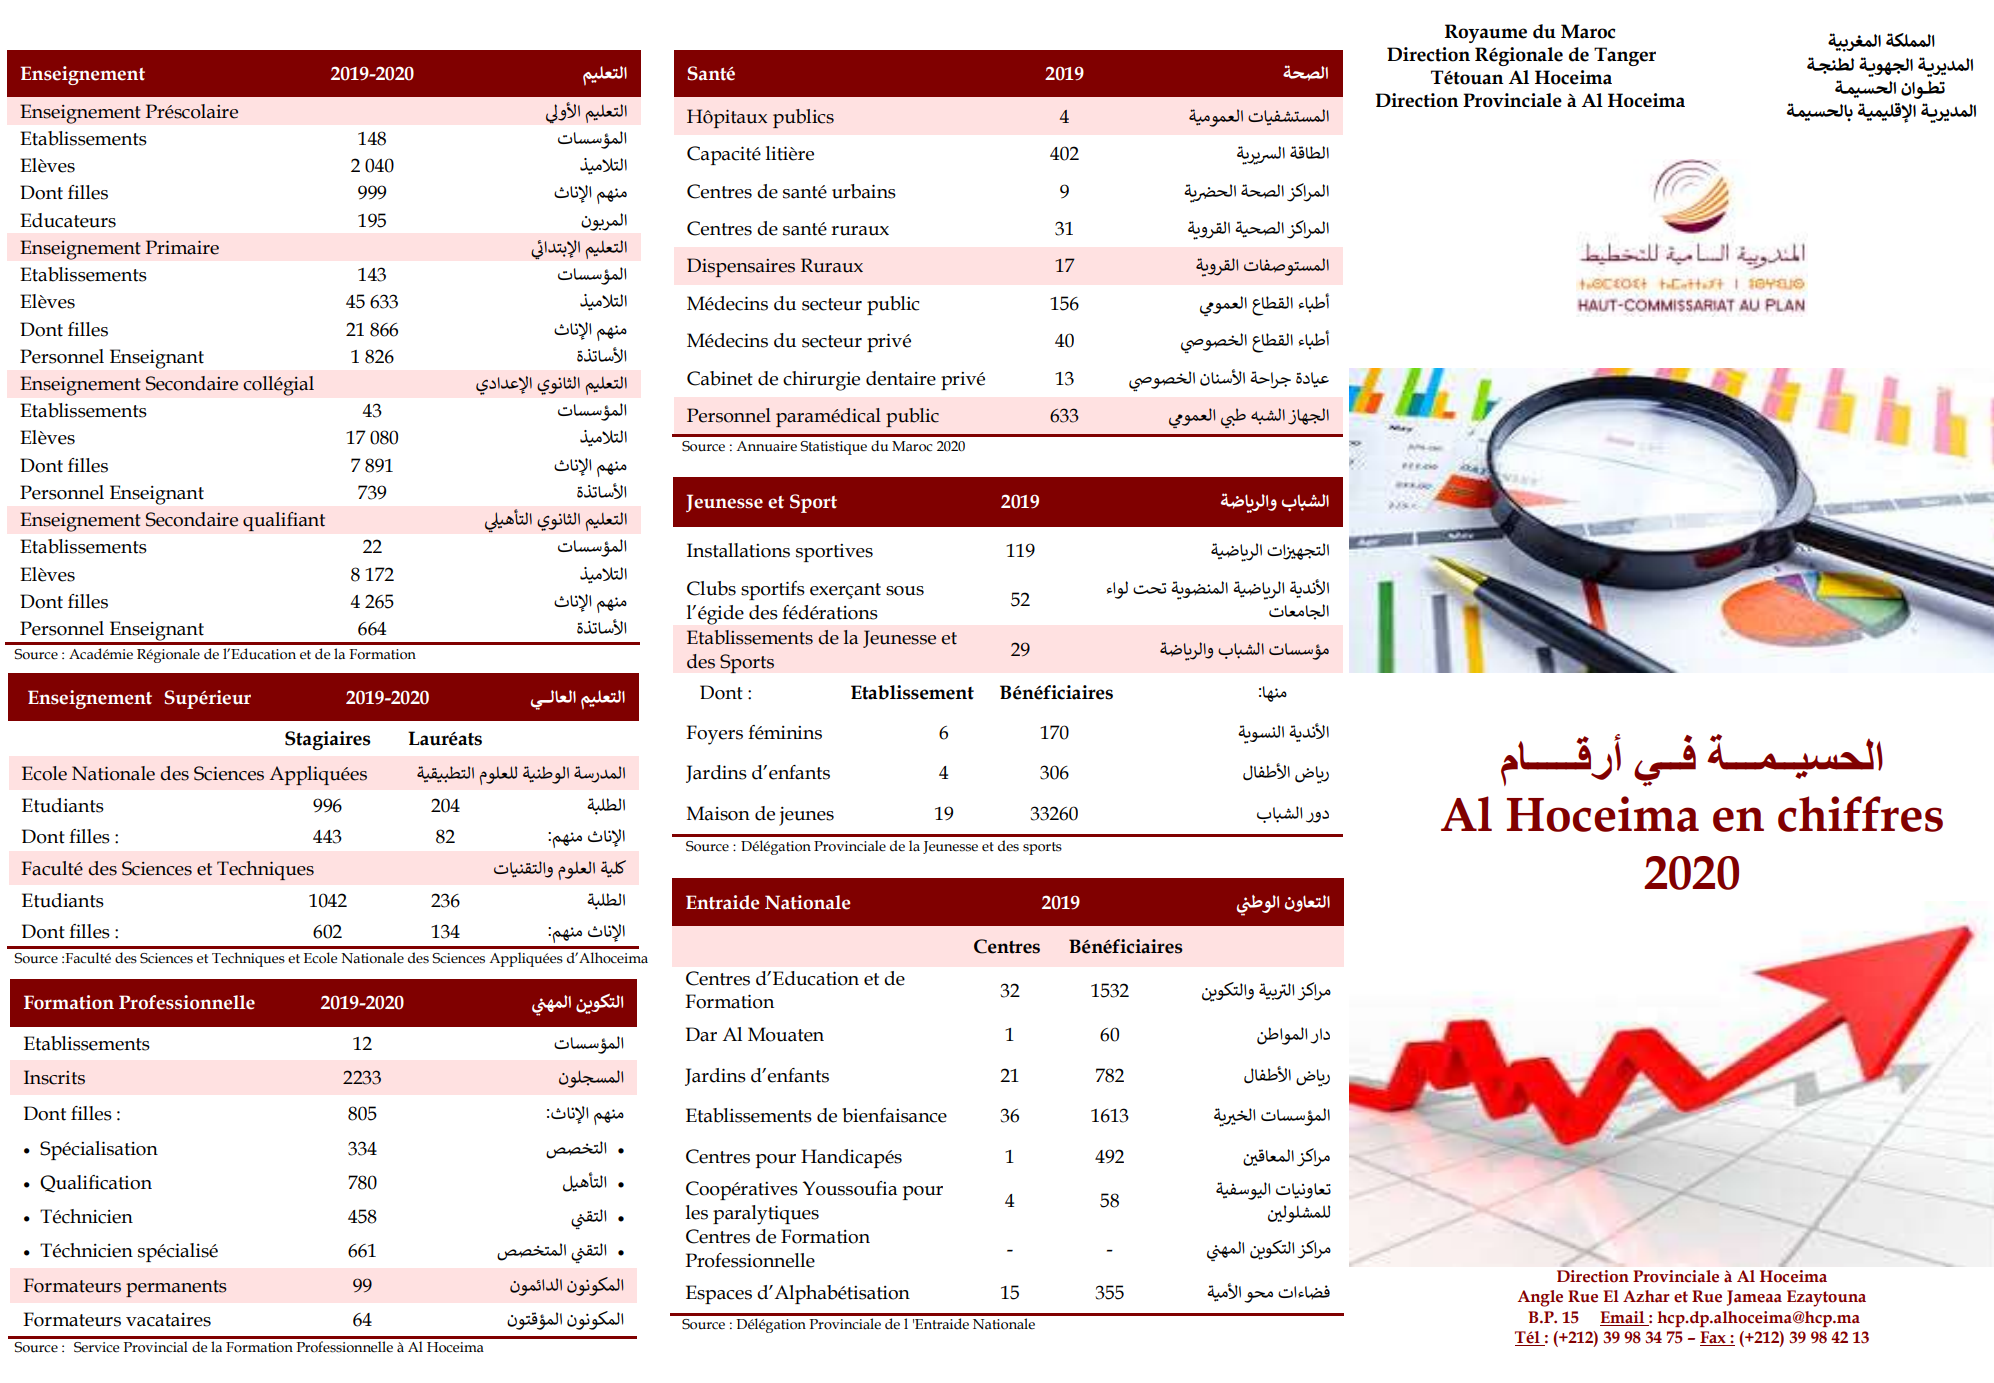 La province d'Al Hoceima en chiffres 2020